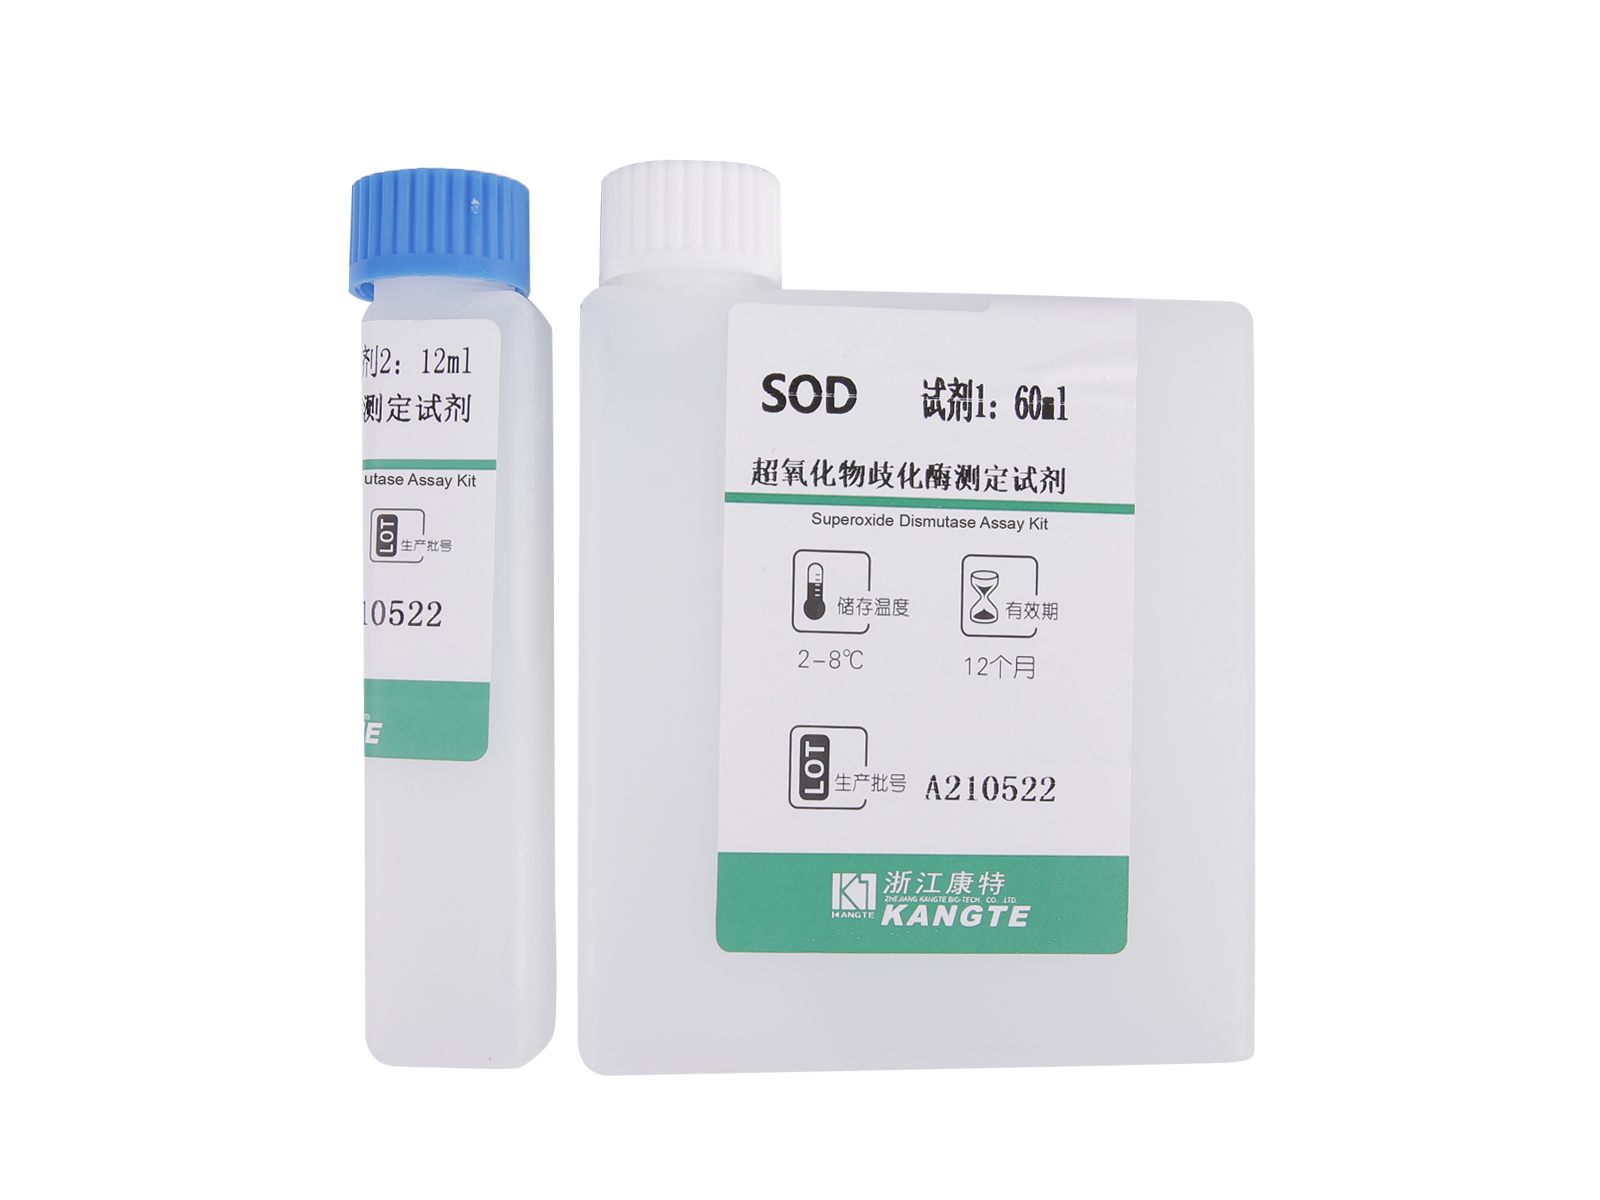 【SOD】과산화물 제거효소 분석 키트(비색법)